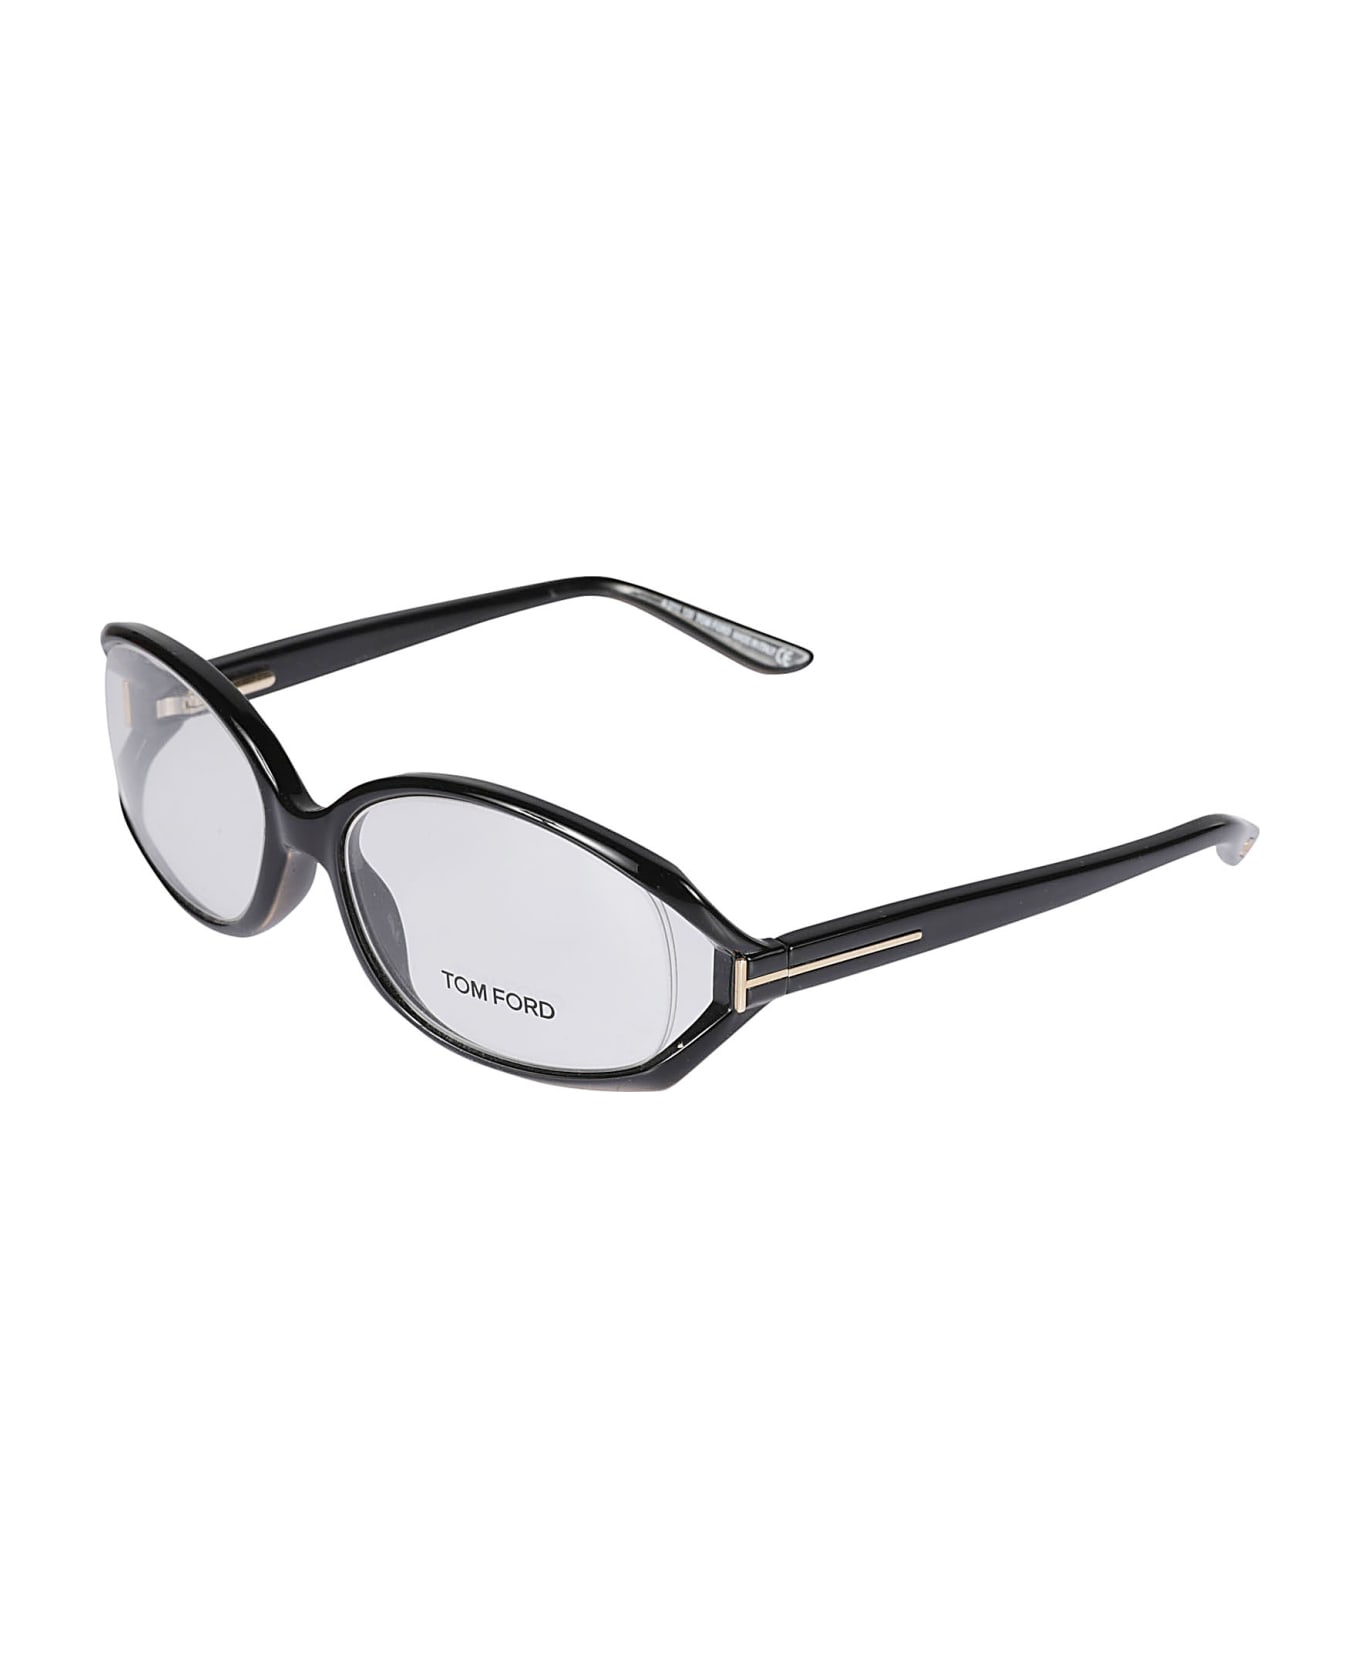 Tom Ford Eyewear Classic Clear Lense Glasses - 001 アイウェア